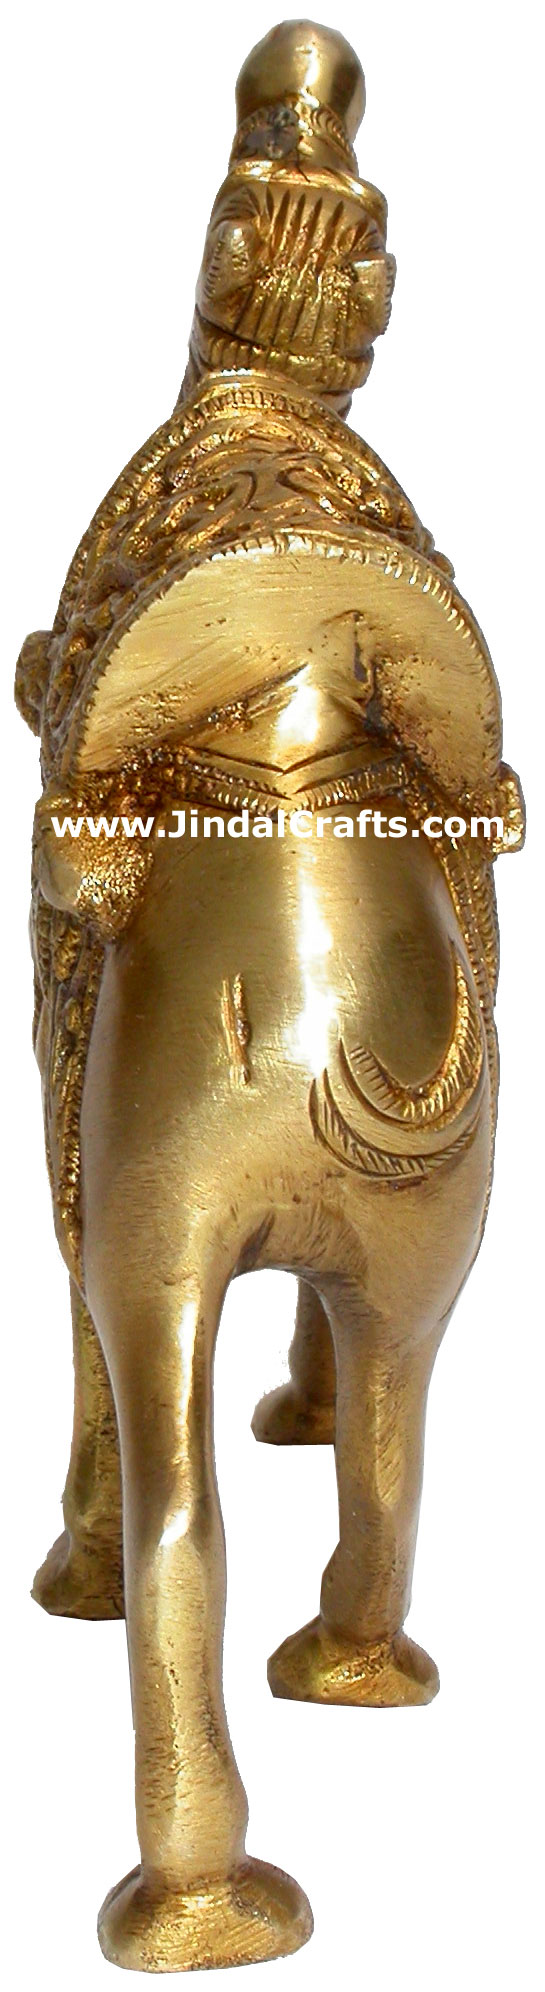 Camel Brass Animal Sculpture Figure India Handicrafts